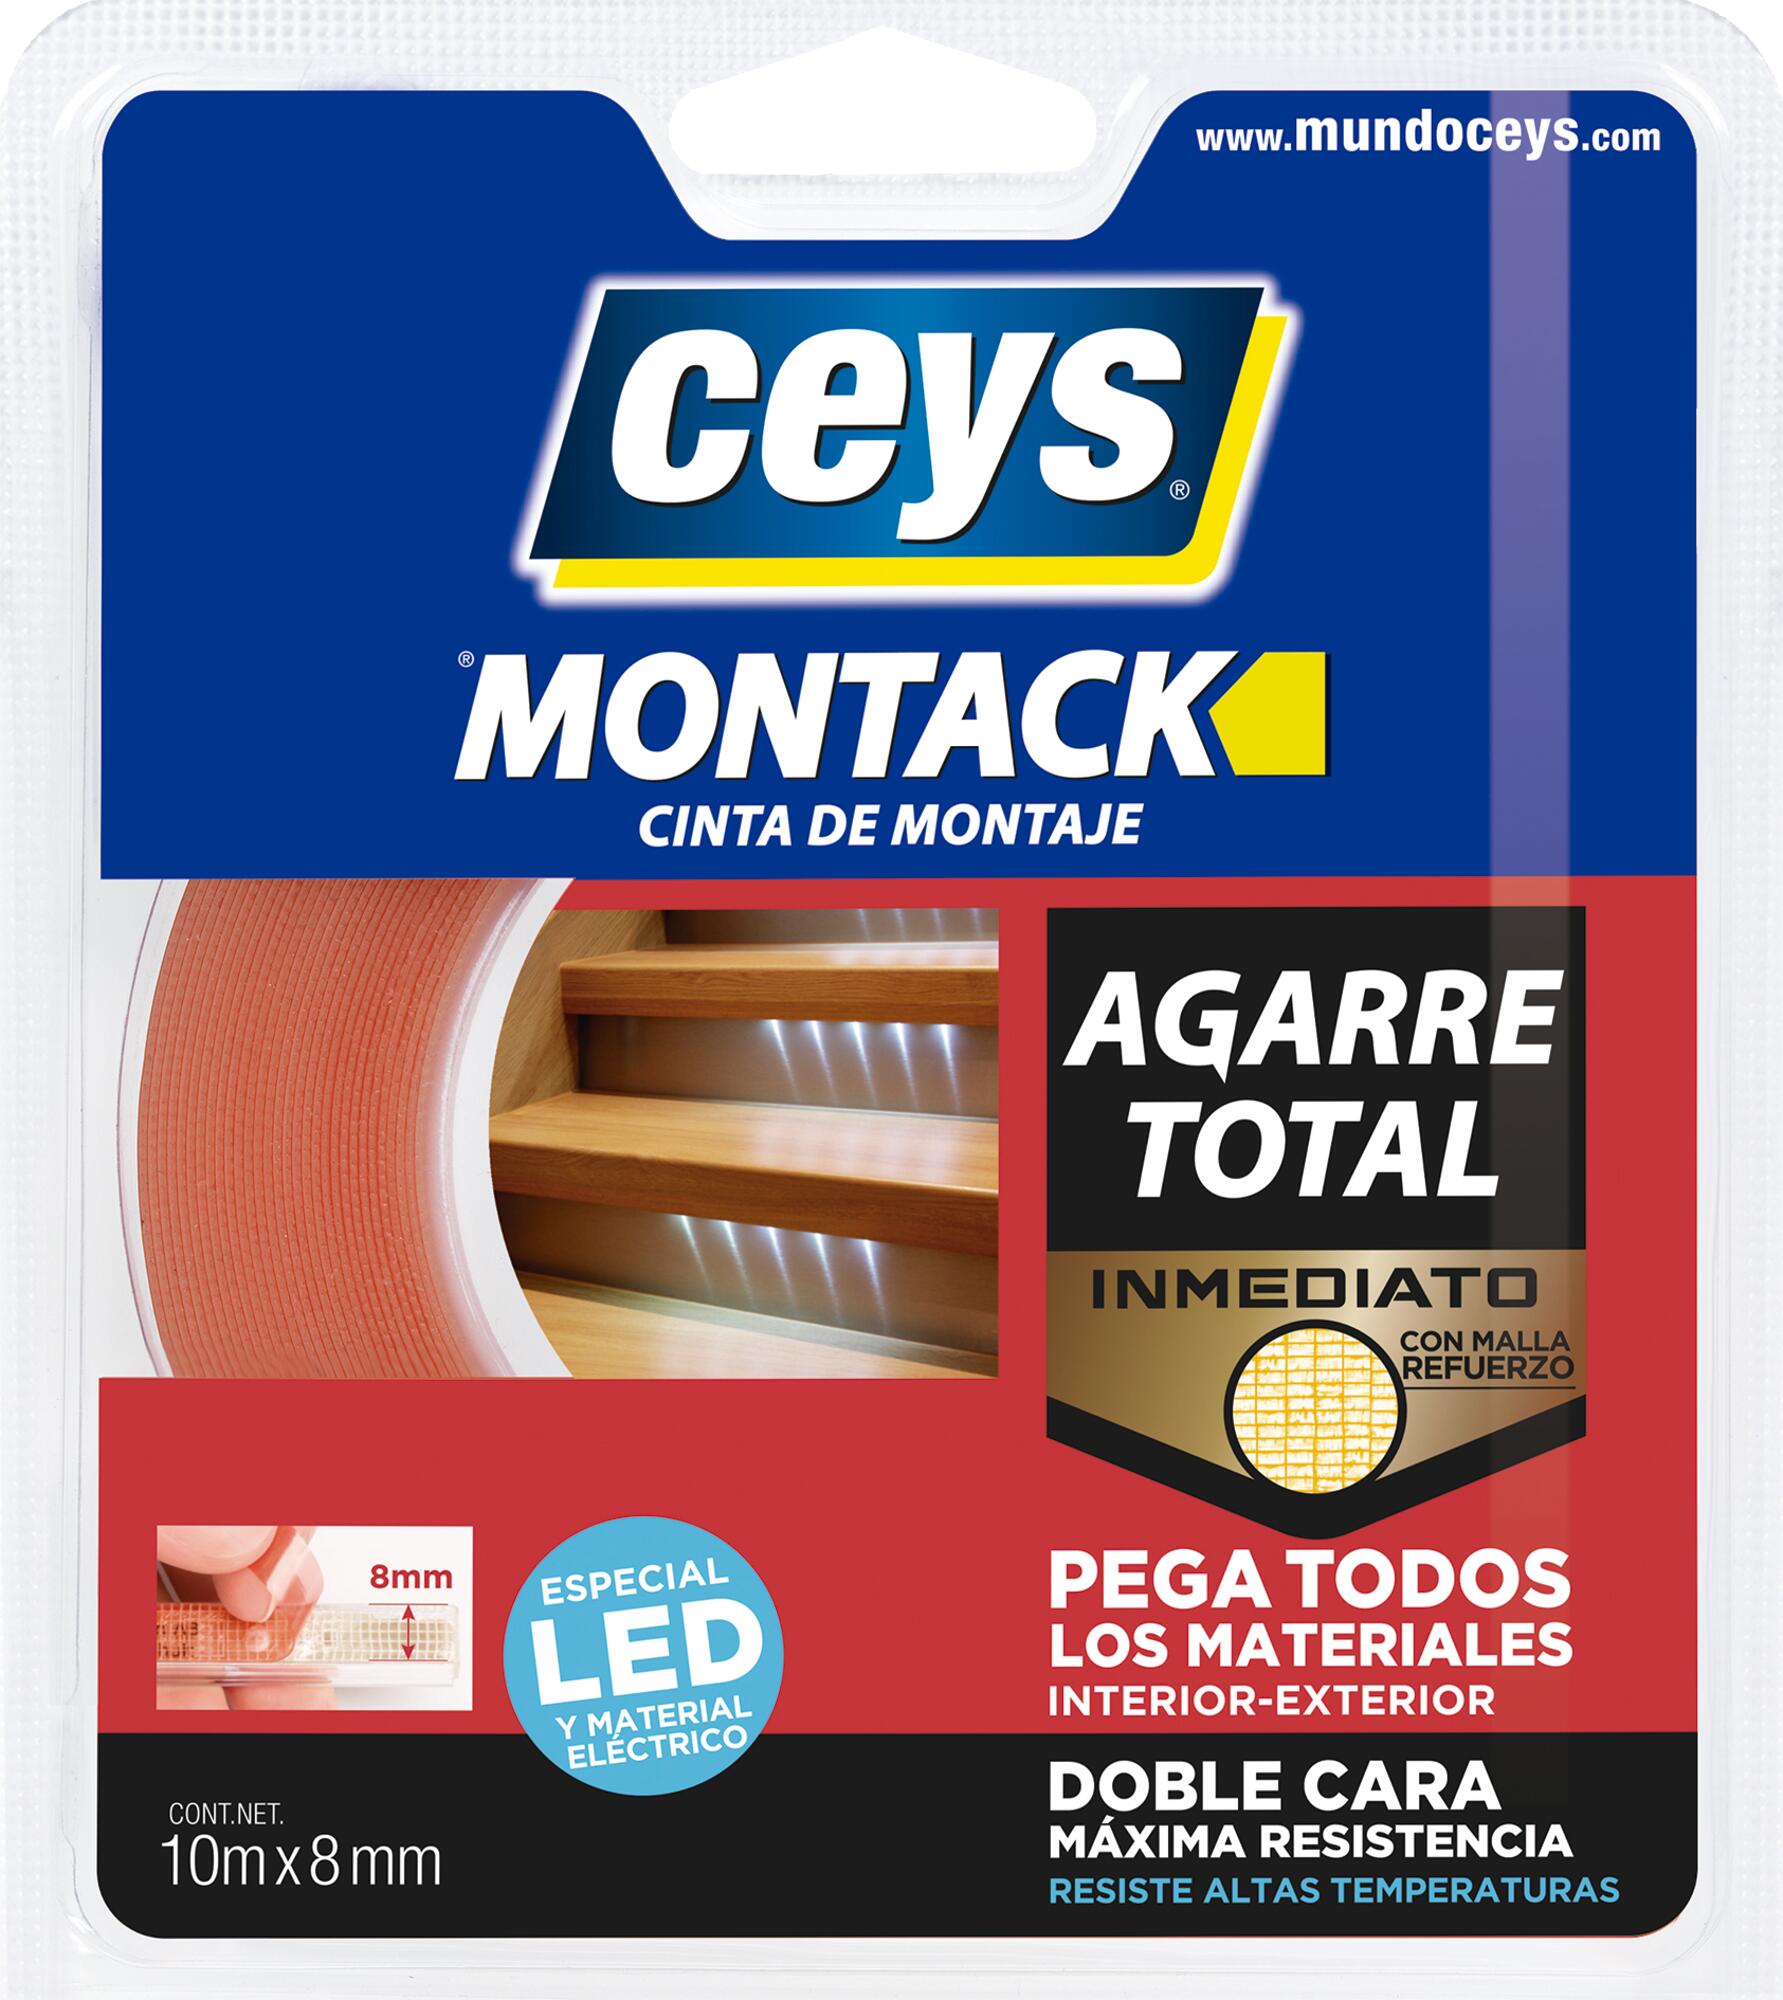 Cinta adhesiva doble cara montack para tiras led y material eléctrico 8mm x 10m